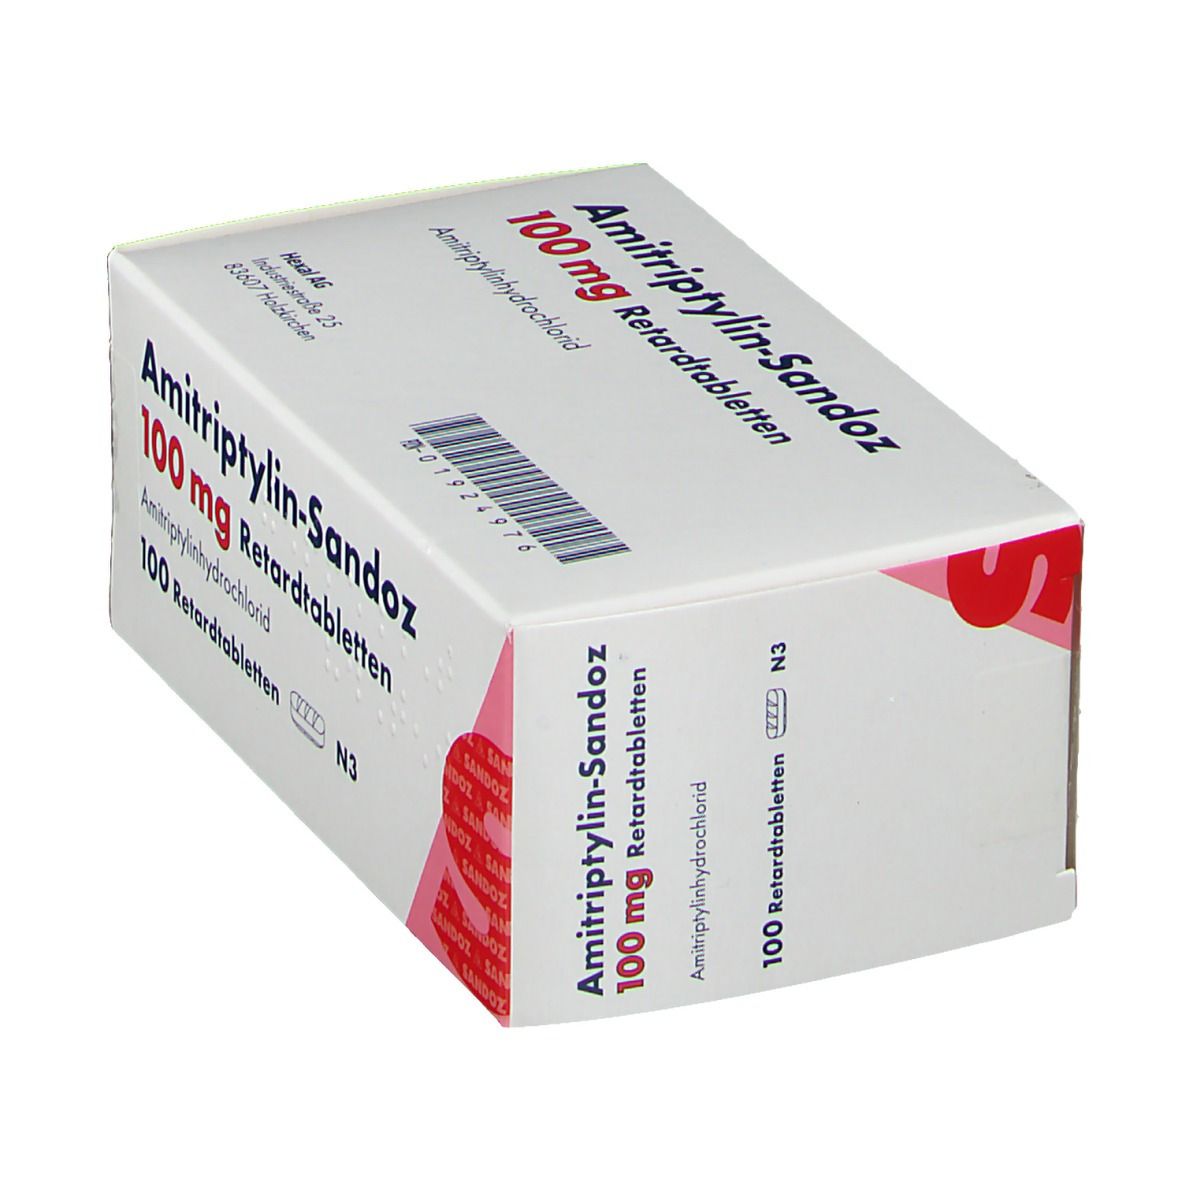 AMITRIPTYLIN Sandoz 100 mg Retardtabletten